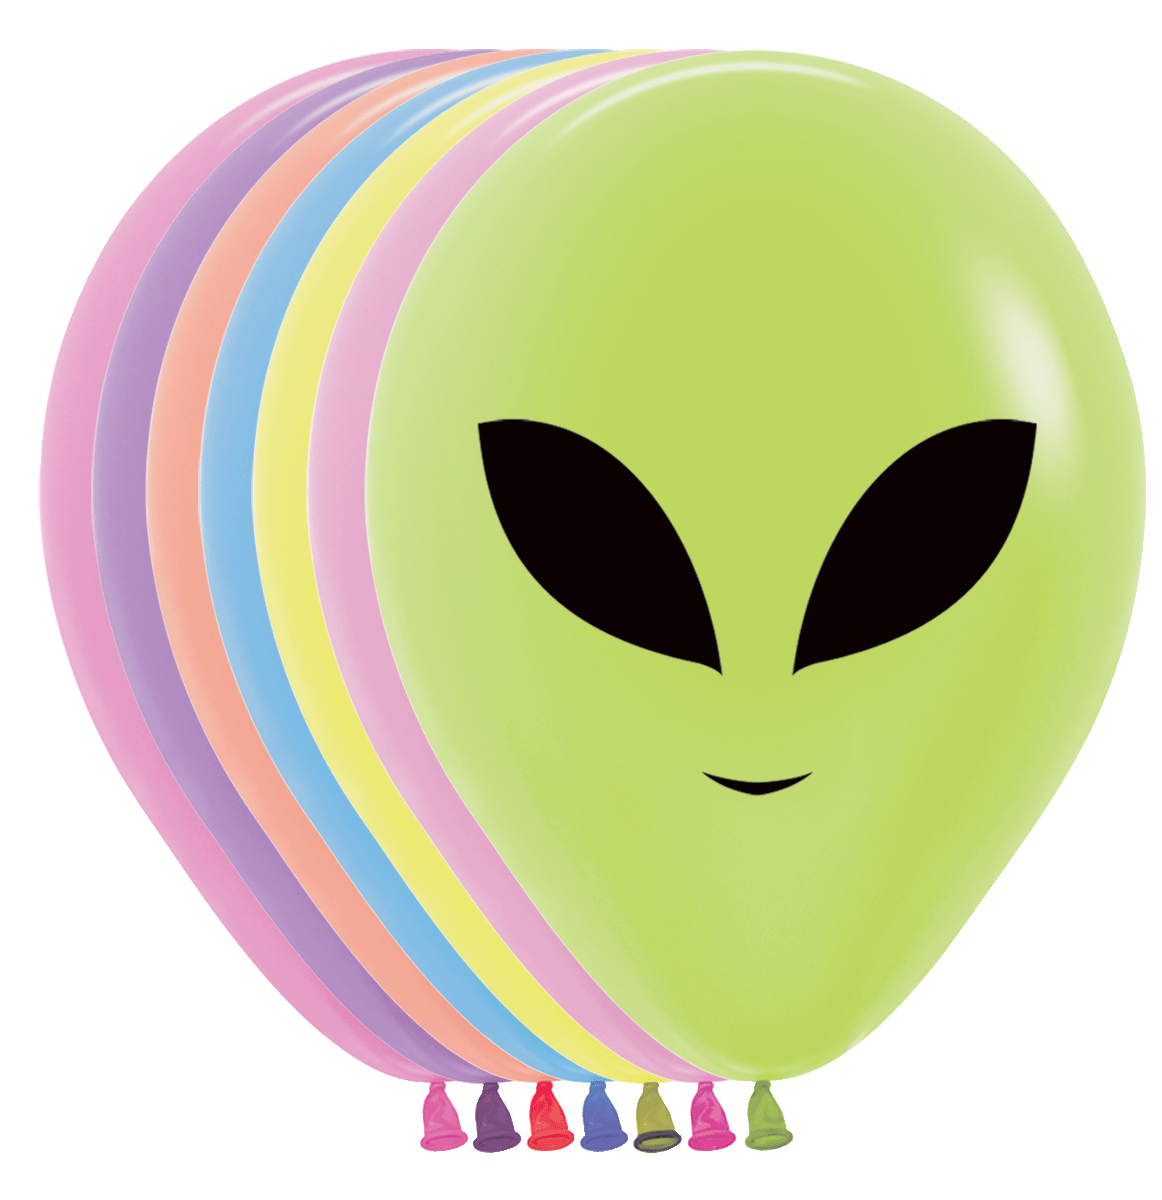 Surtido de neón Alien 11″ Globos de látex (50 unidades)